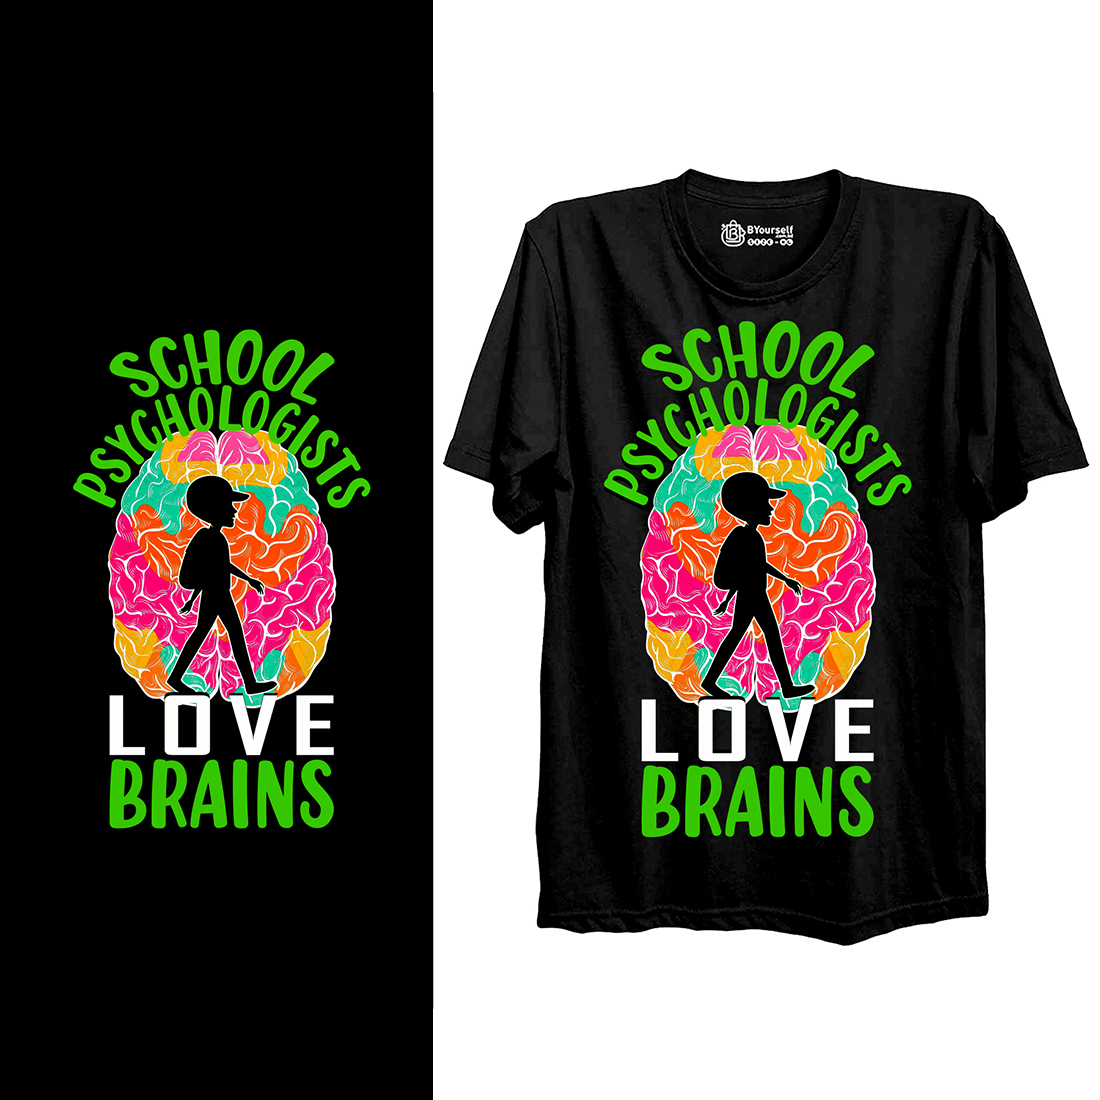 Brain T-Shirt Design main cover.